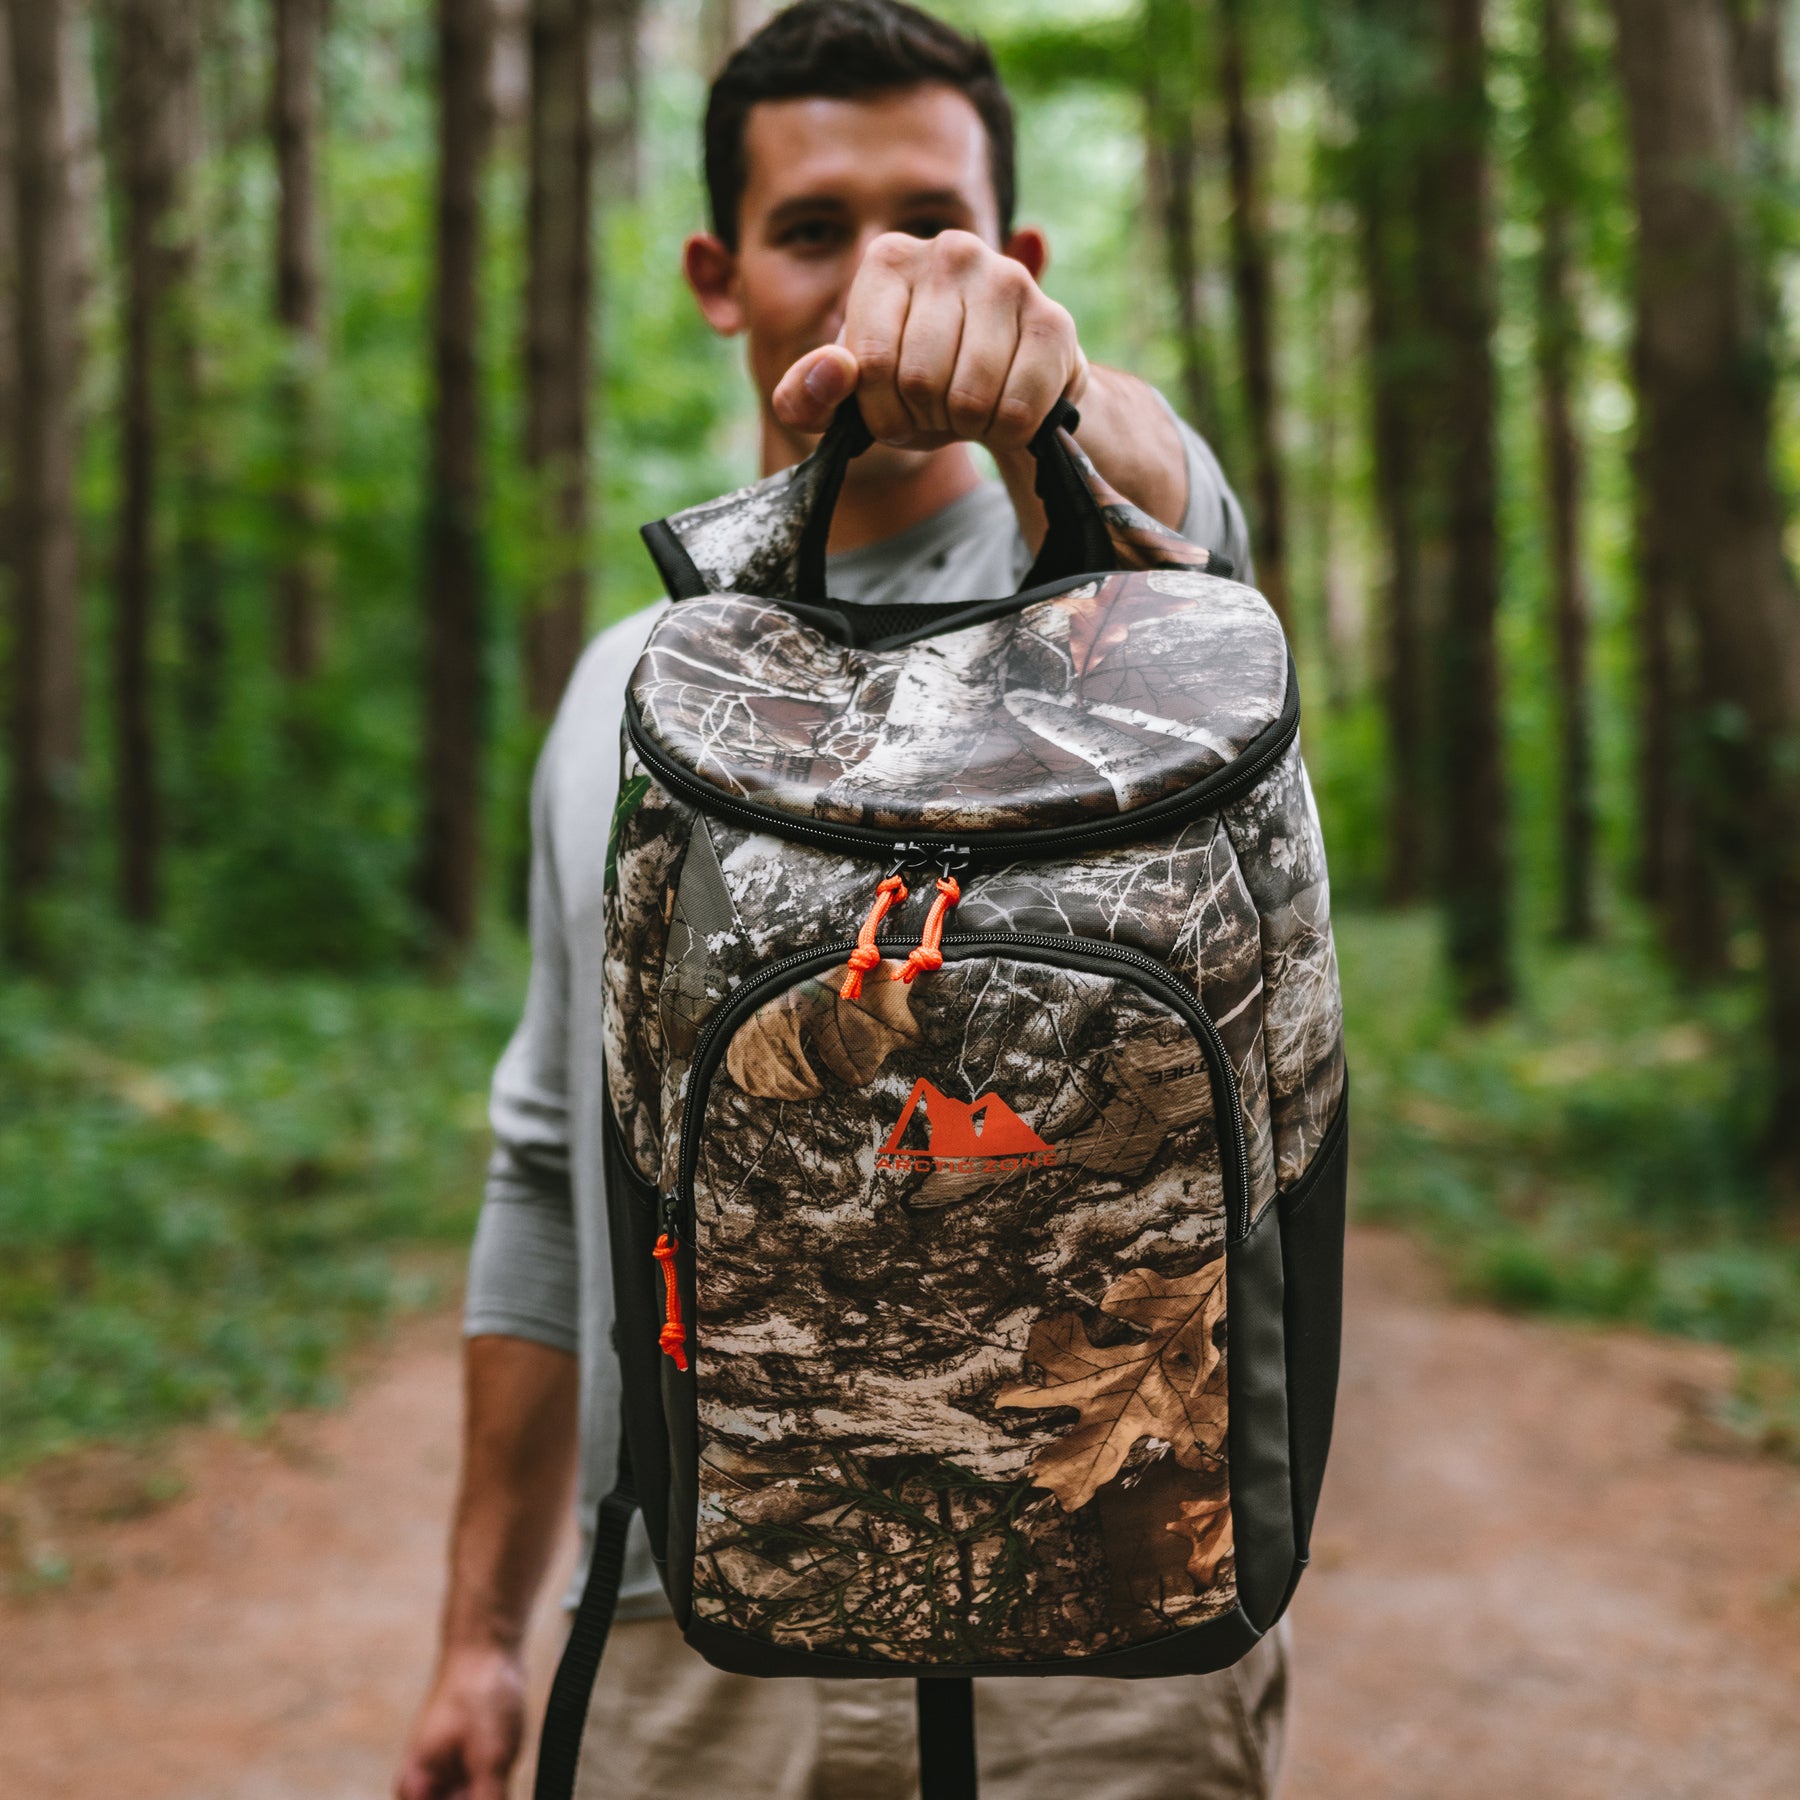 Igloo Realtree® Cooler Backpack 